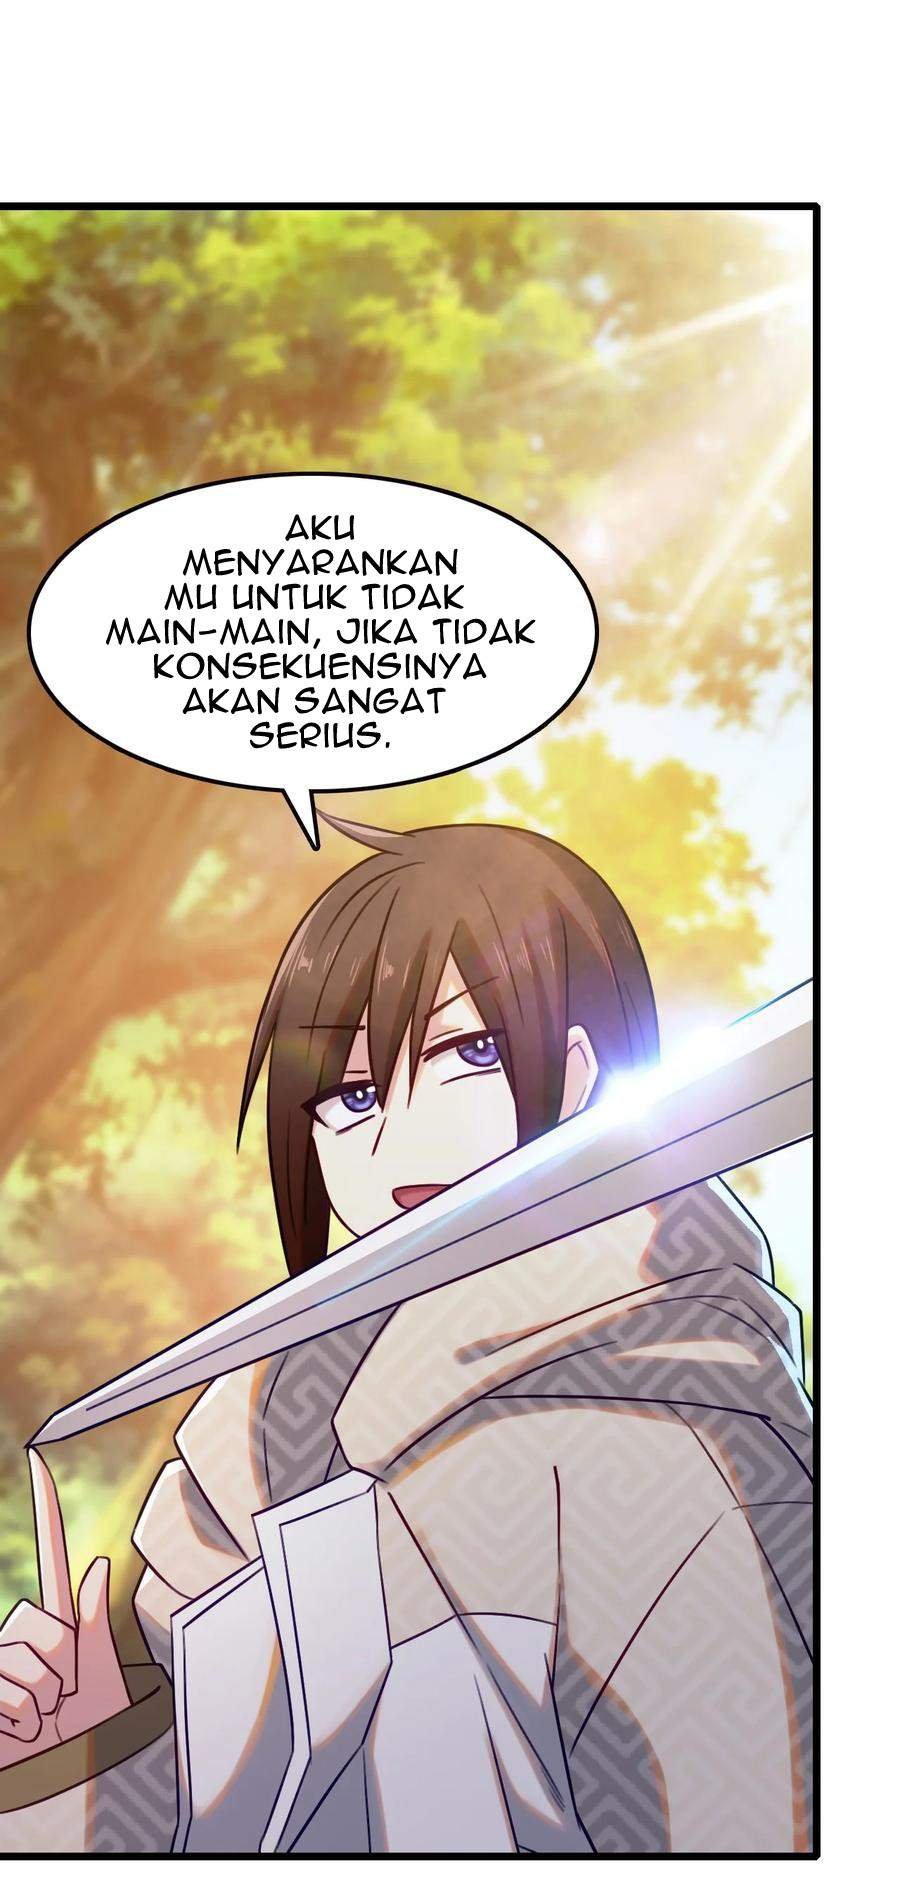 Baca My Great Sword (Remake) Chapter 6  - GudangKomik